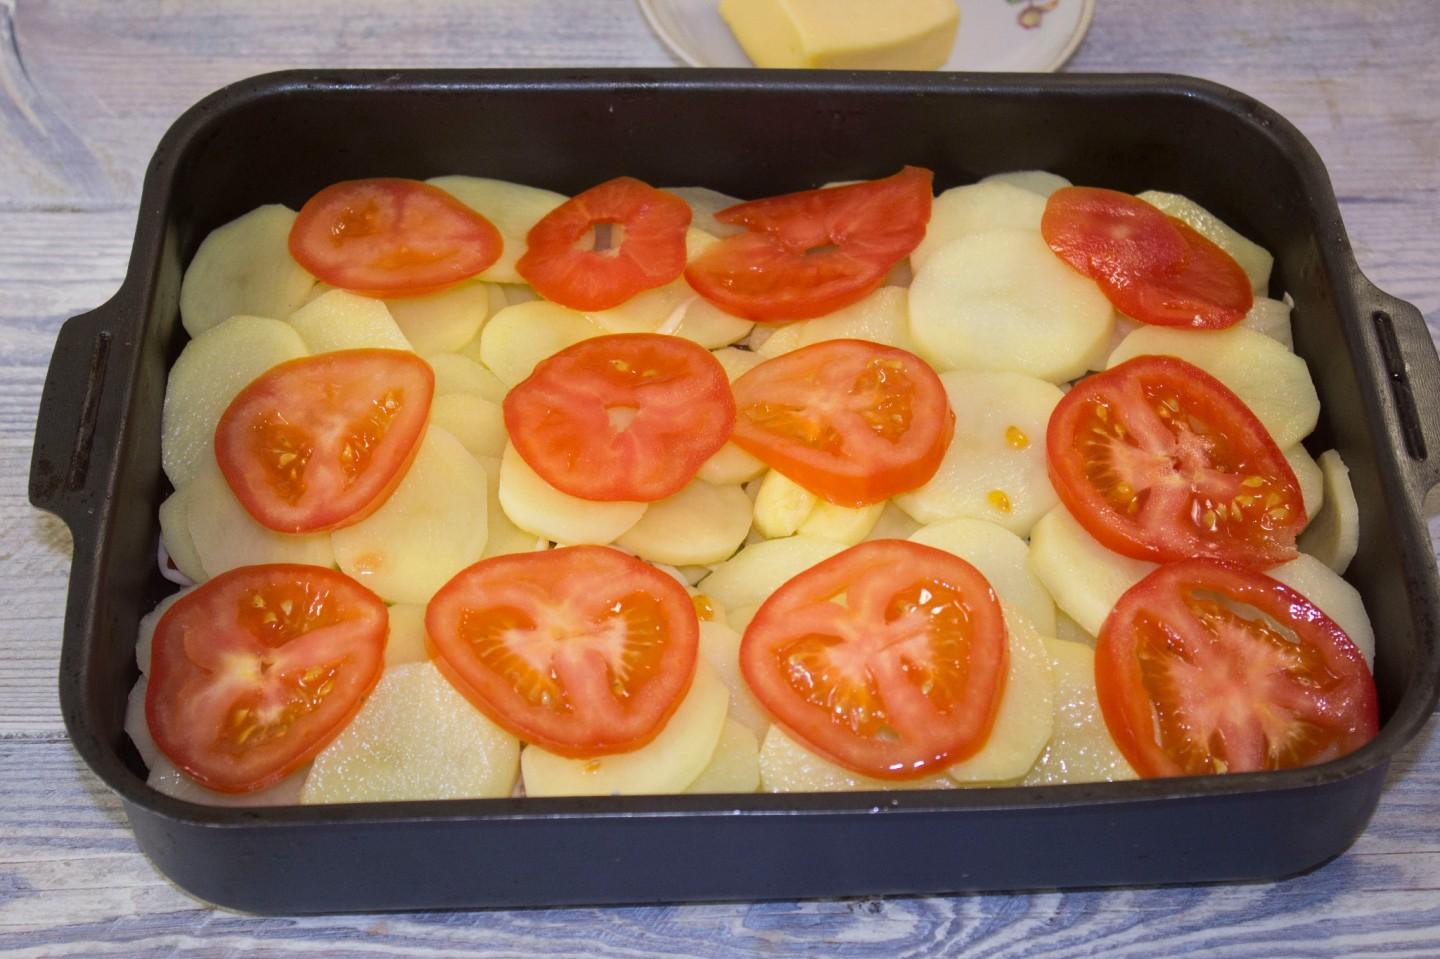 Мясо с картошкой и помидорами слоями. Картошка с помидорами в духовке. Картошка с помидорами и сыром. Картофель с помидорами и сыром в духовке. Картошка с фаршем и помидорами в духовке.